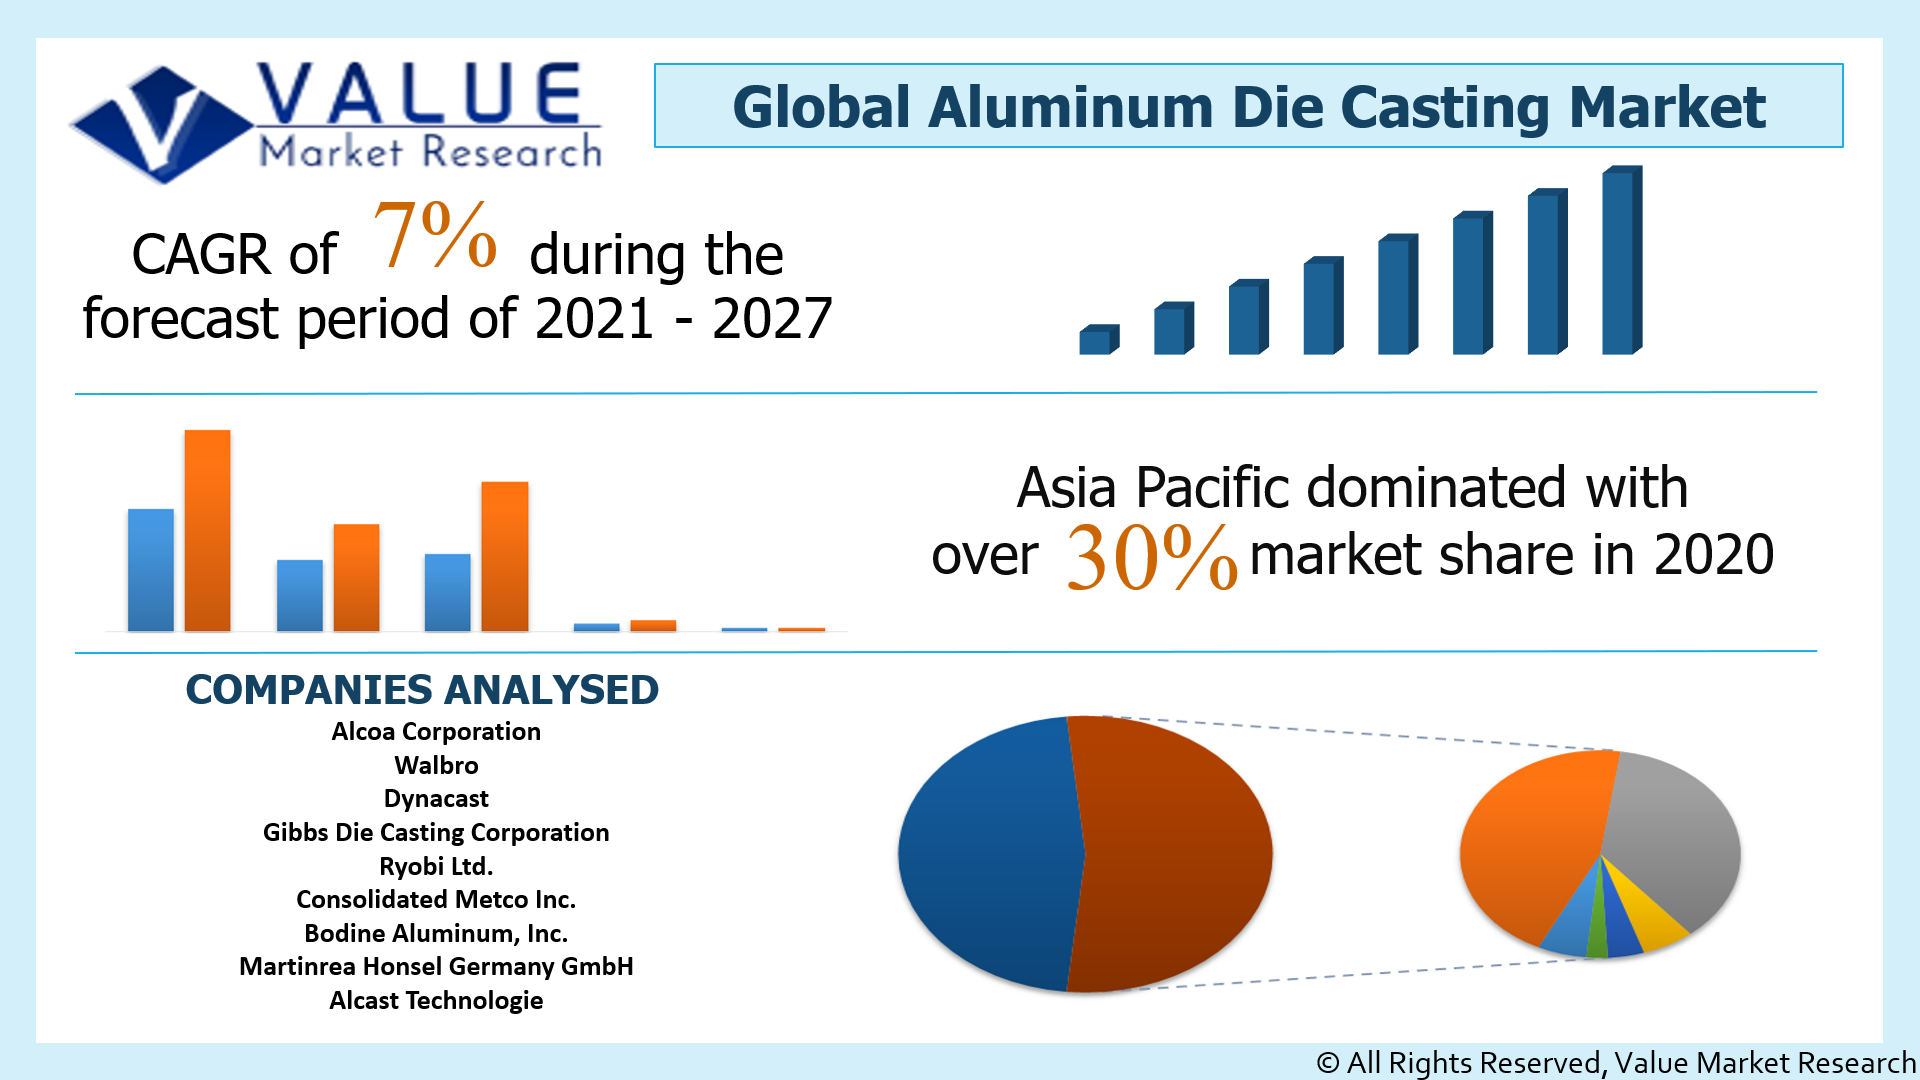 Global Aluminum Die Casting Market Share